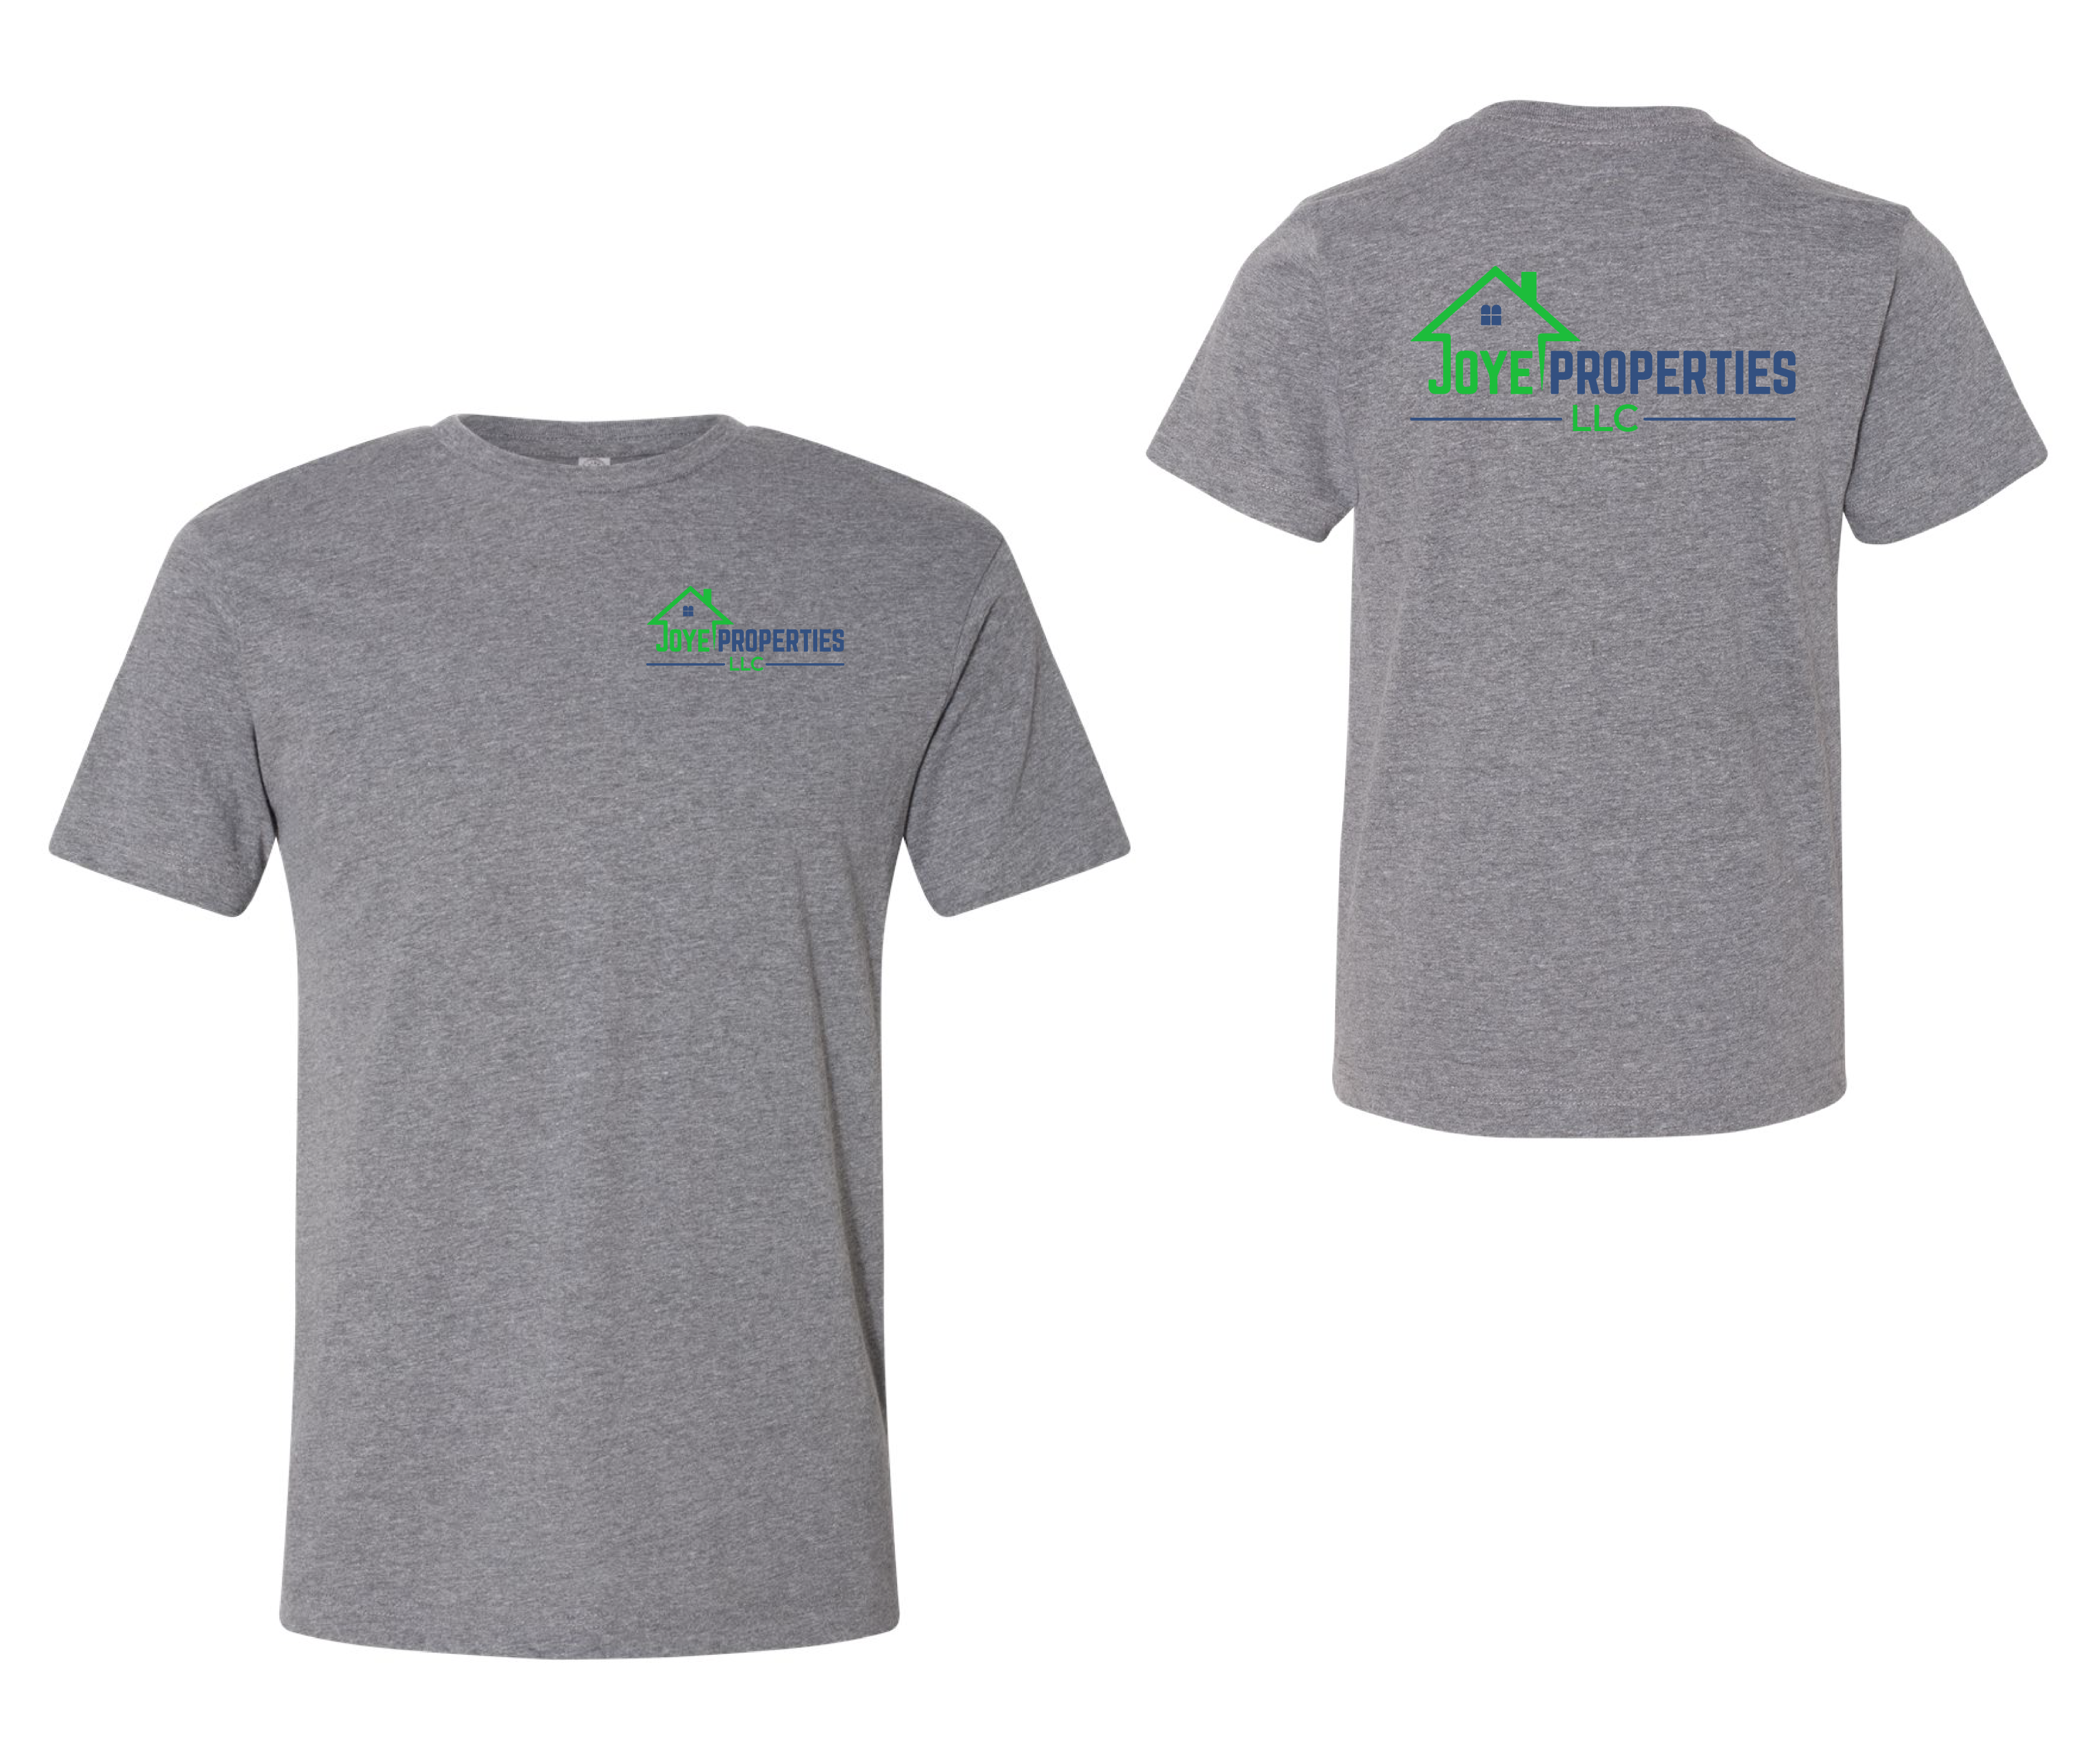 Short Sleeve Joye Properties LLC T-Shirt